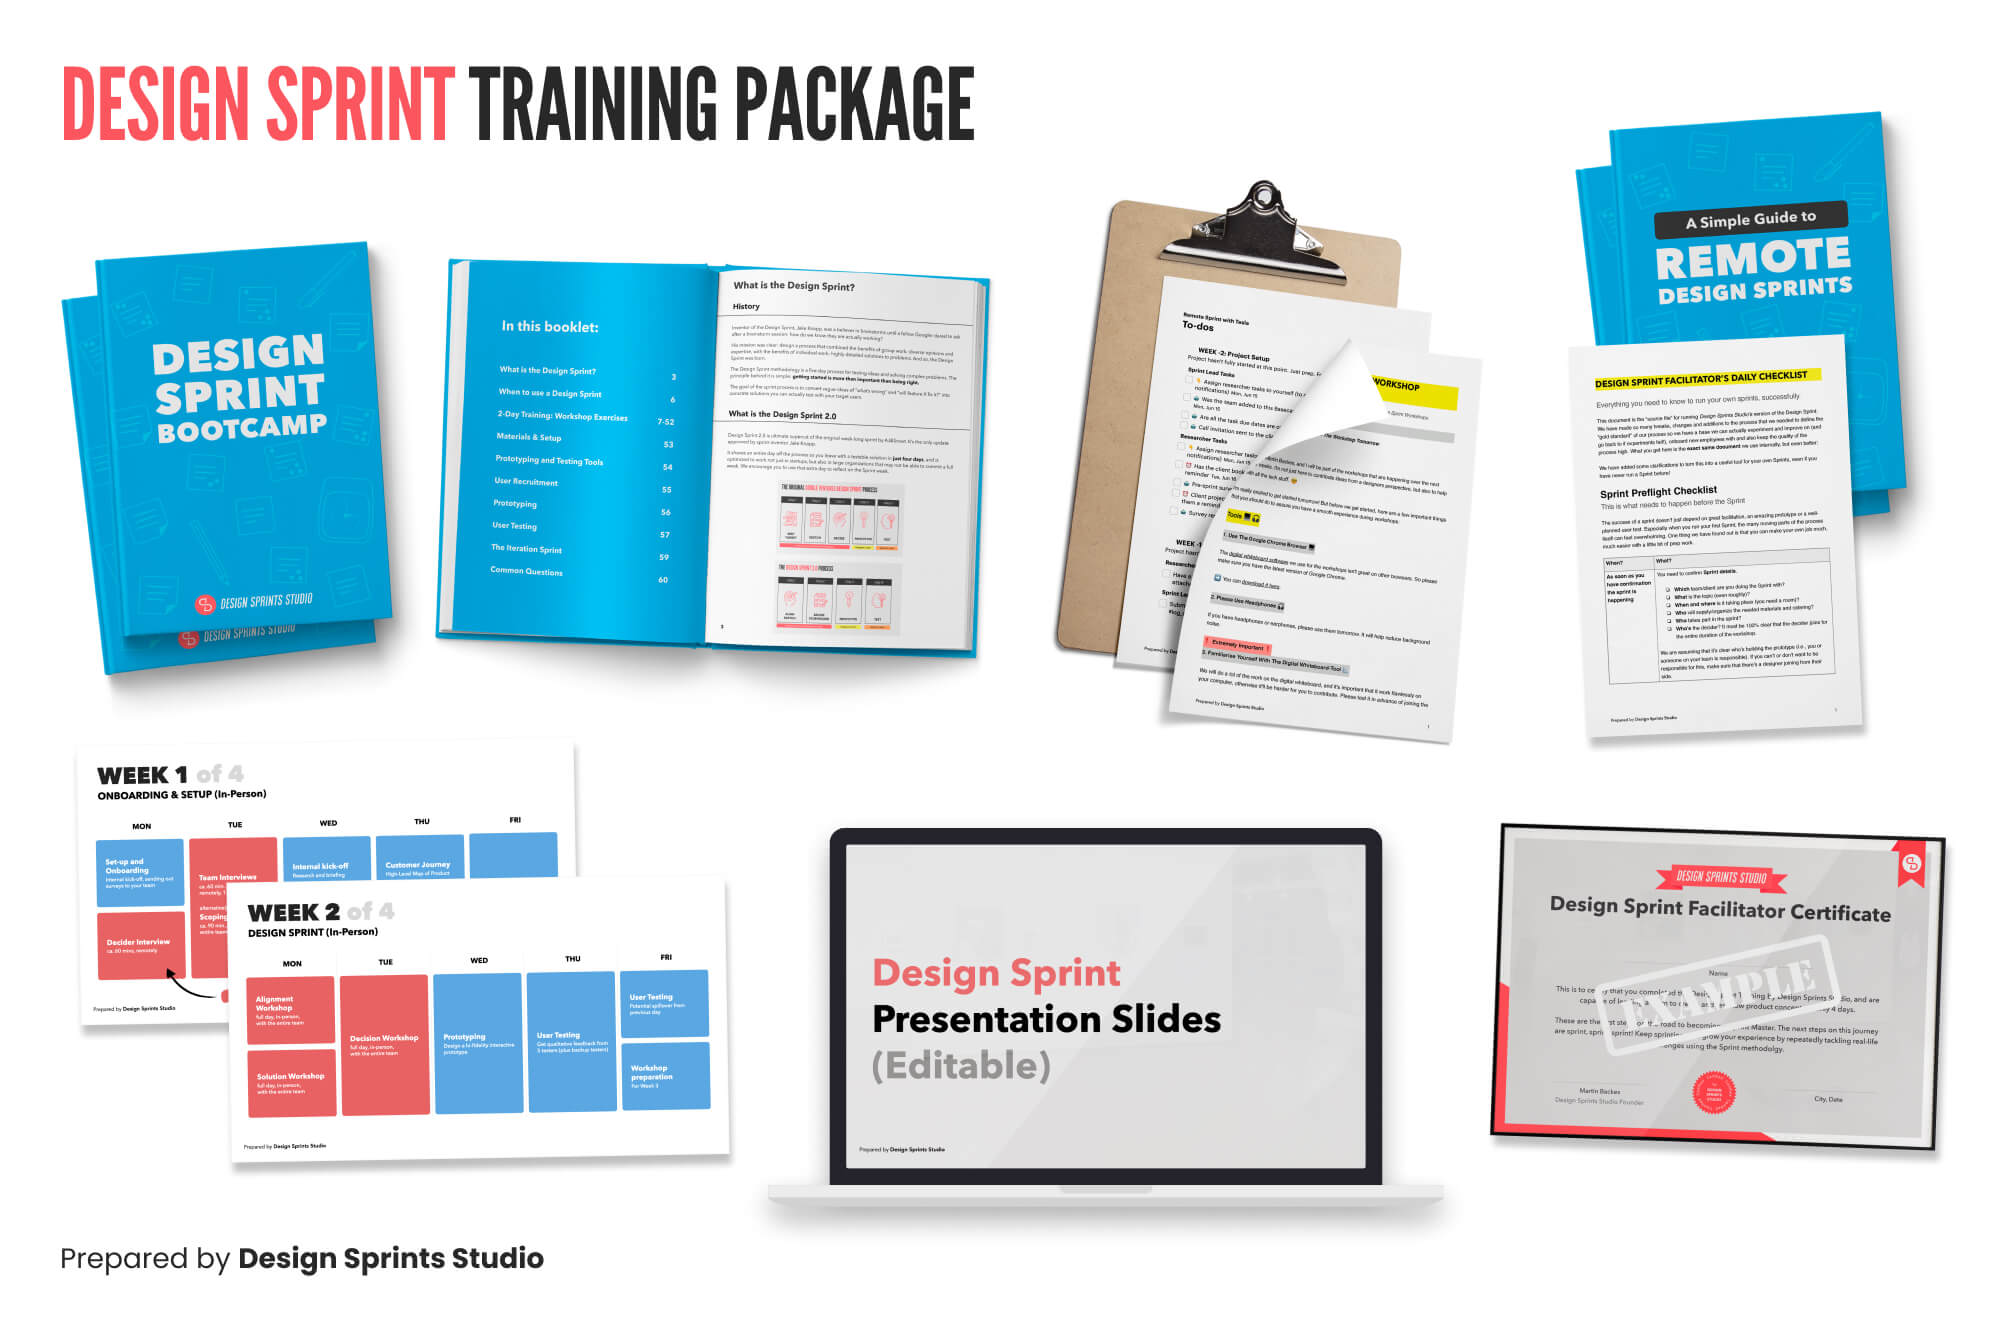 Design Sprint Training Package